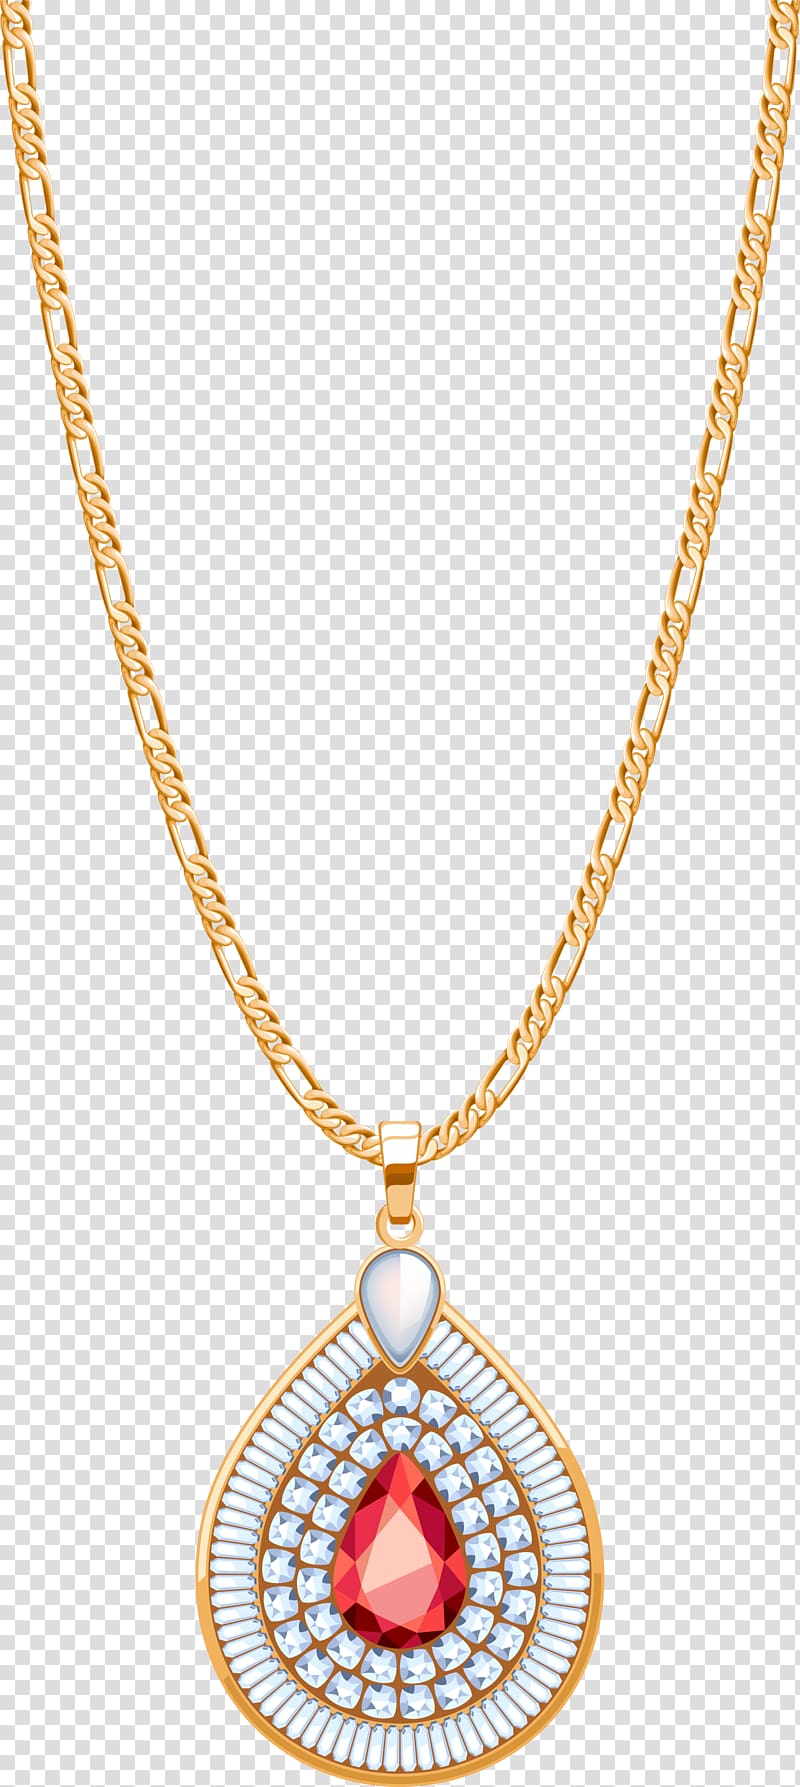 Locket Jewellery Necklace Diamond, Golden Gemstone Necklace transparent background PNG clipart